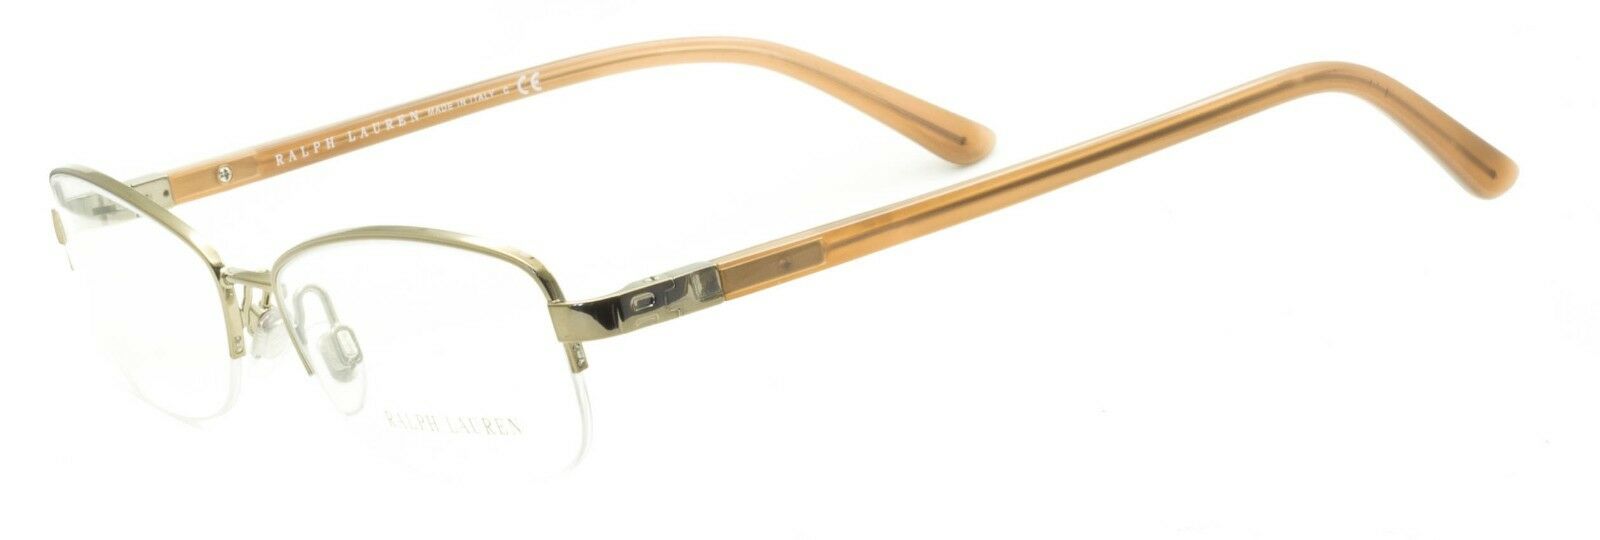 RALPH LAUREN POLO 2117 5650 54mm Eyewear FRAMES RX Optical Eyeglasses  GlassesNew - GGV Eyewear